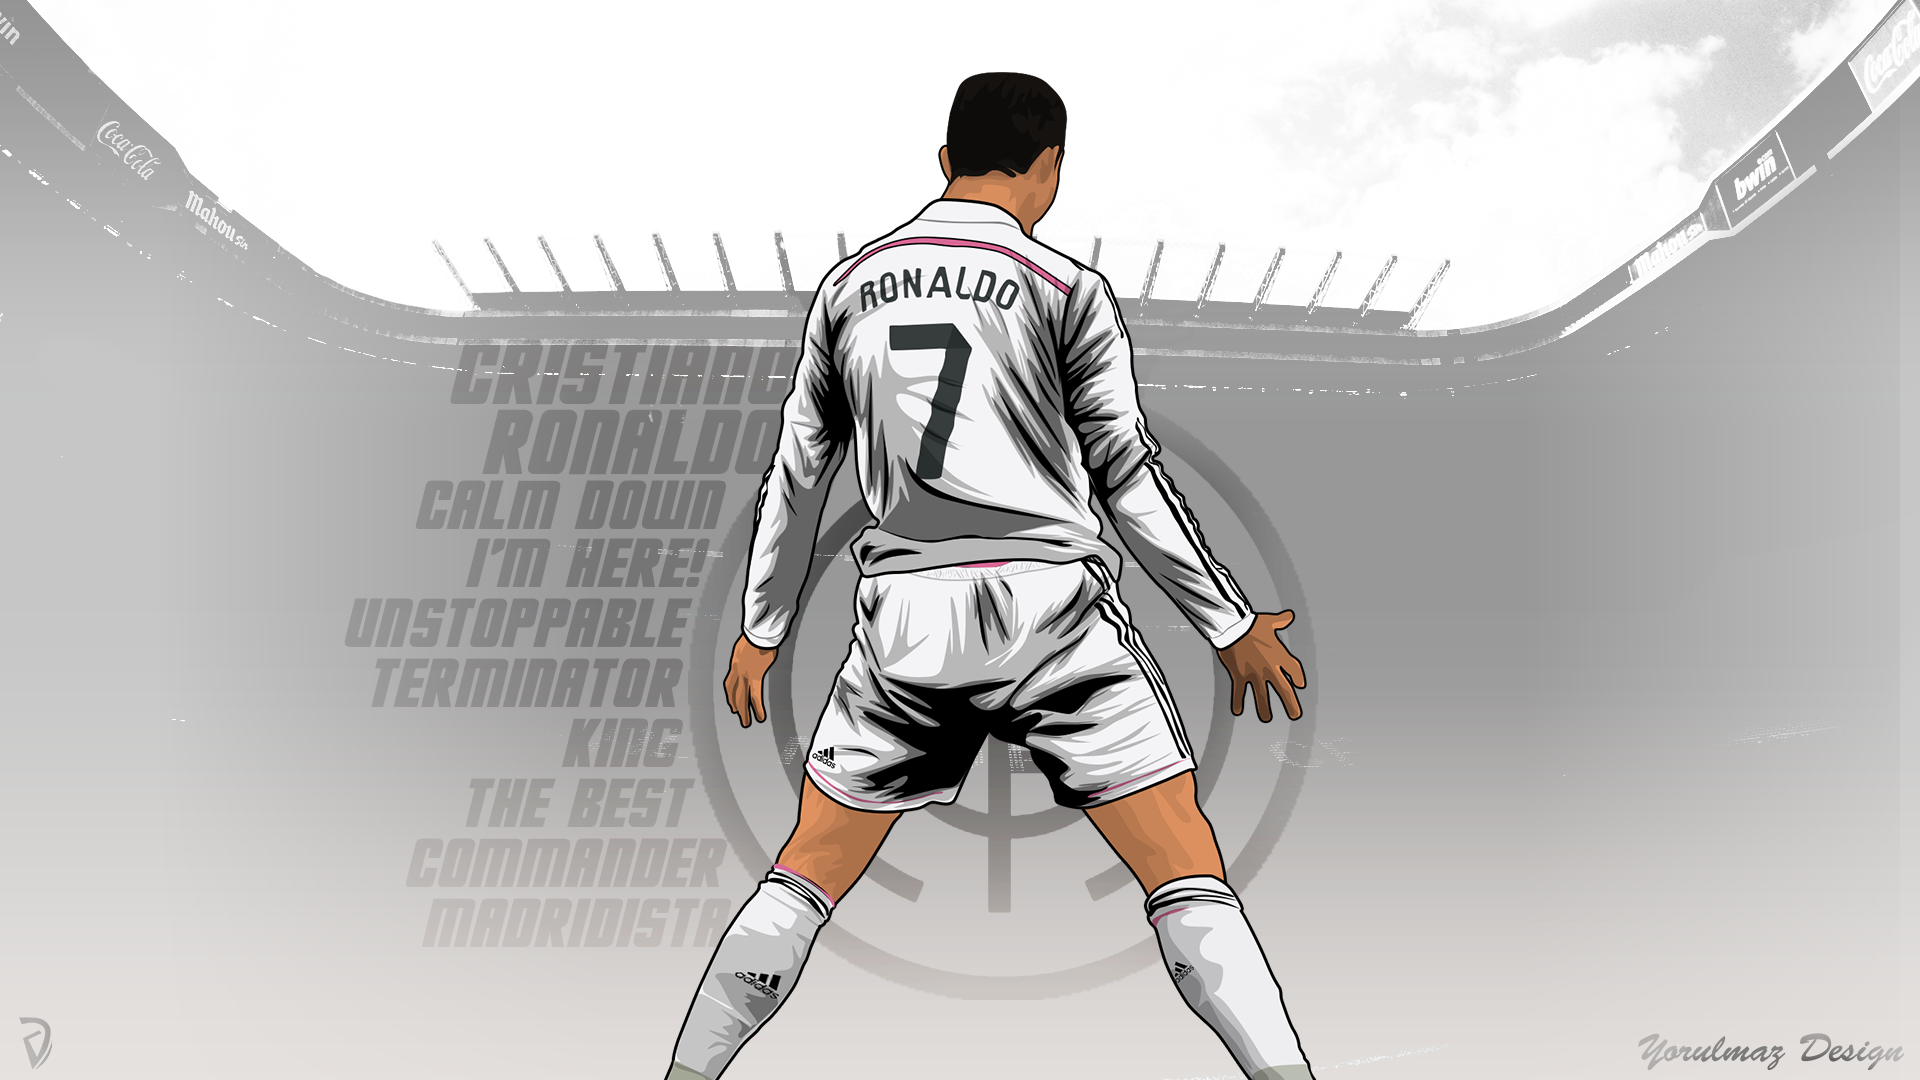 Cristiano Ronaldo CR7 HD Wallpaper Free Download Wallpaperxyz.com